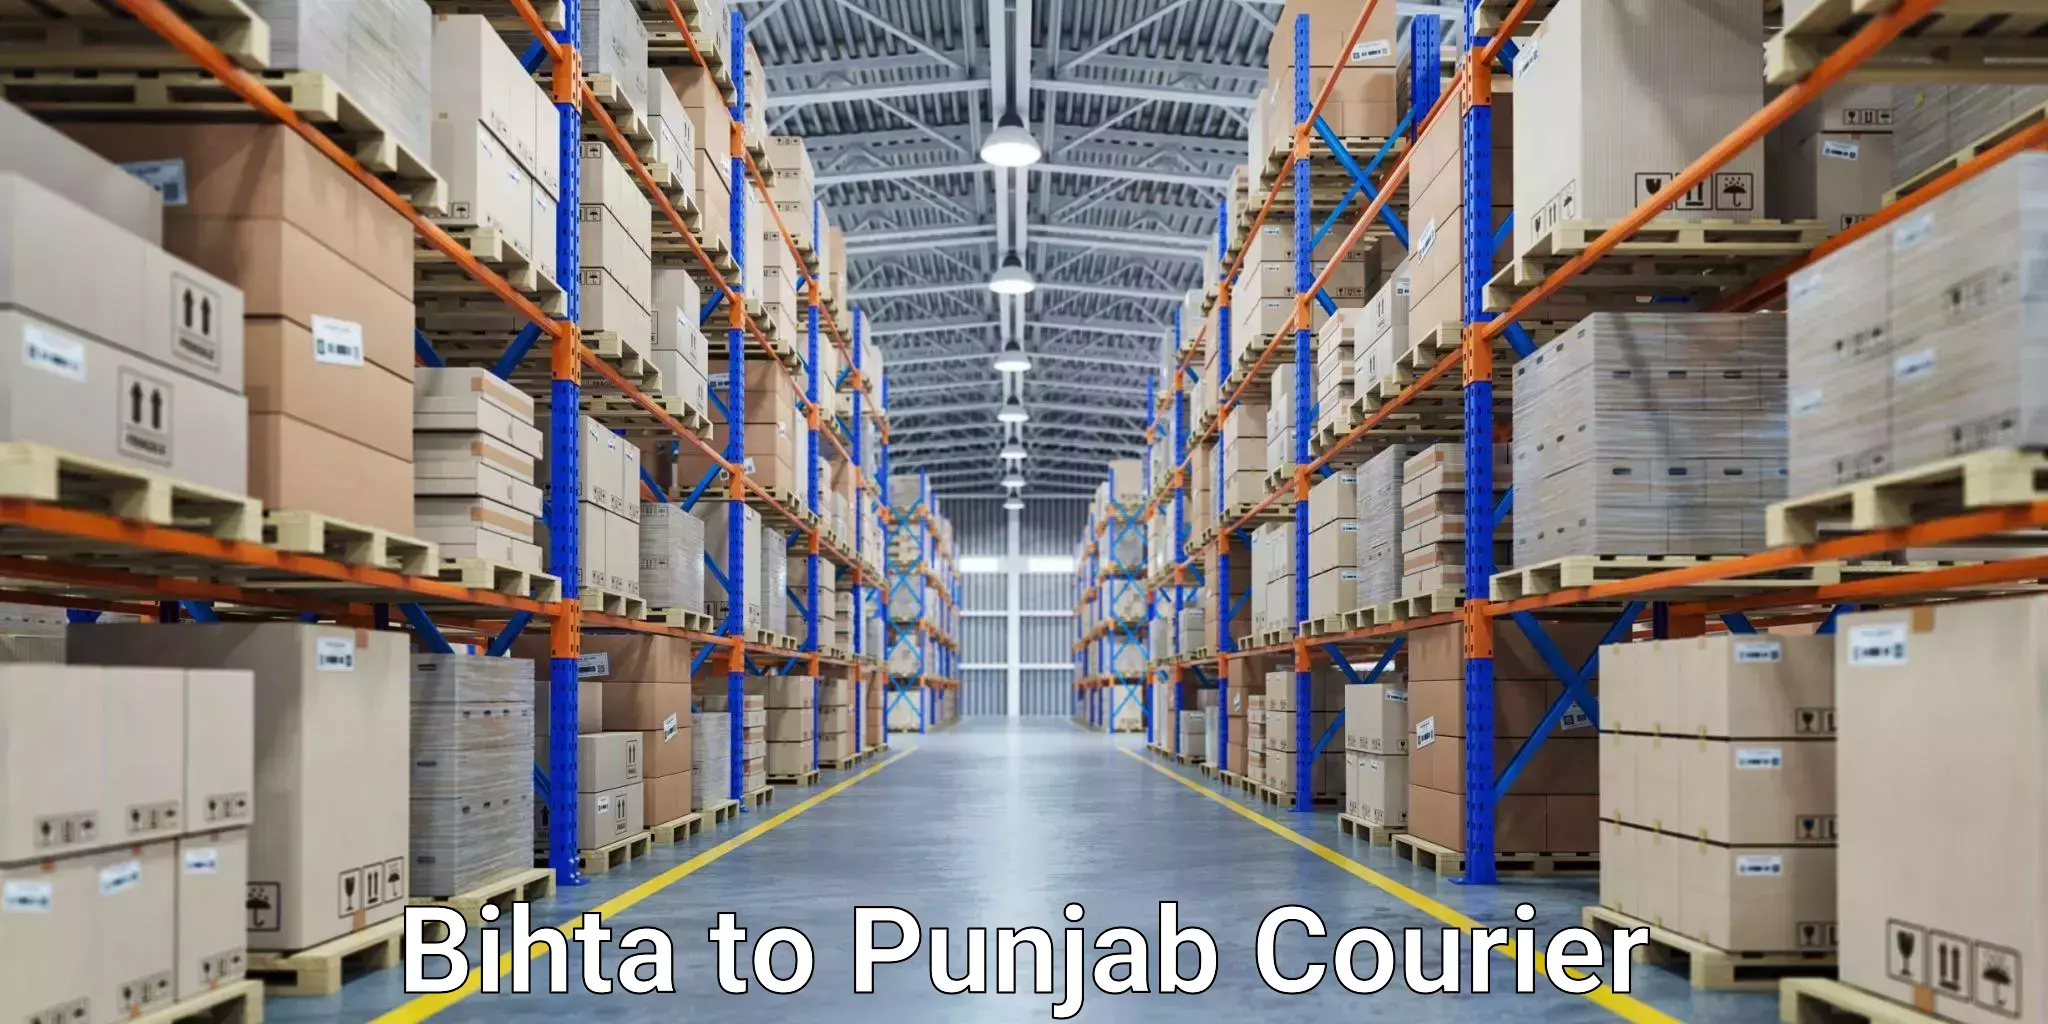 Courier service comparison Bihta to Sirhind Fatehgarh